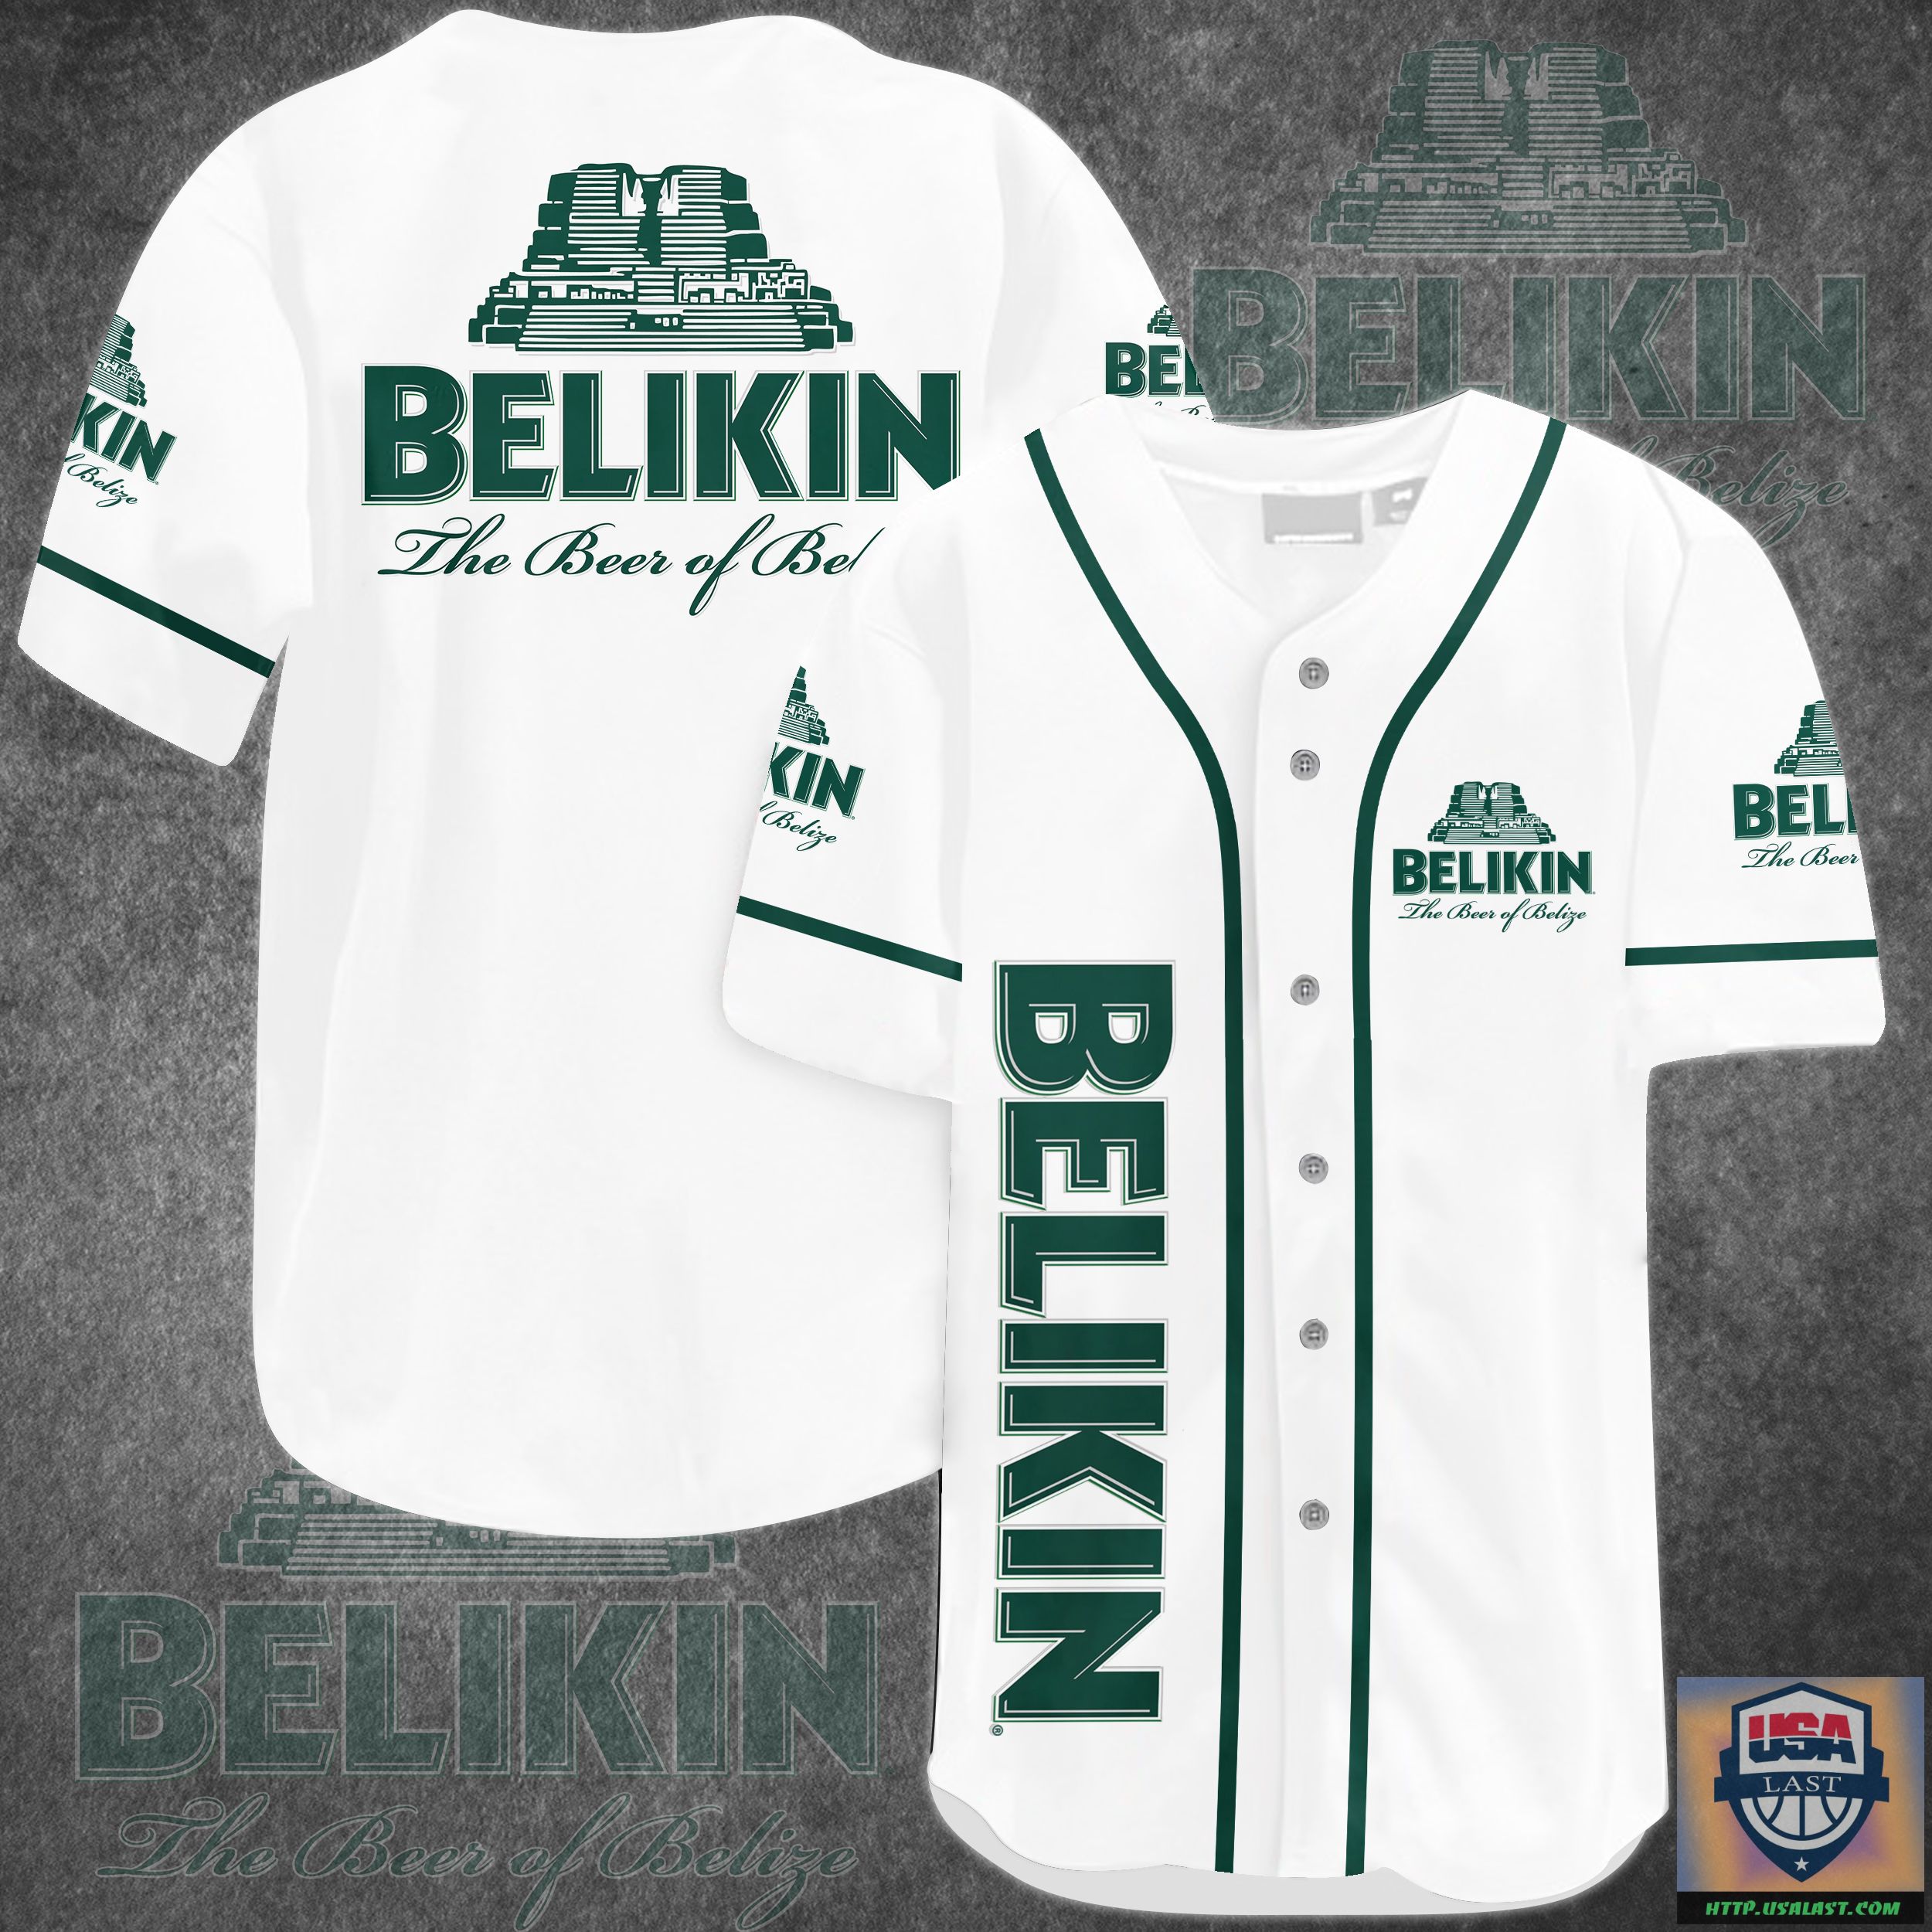 Belikin Beer Baseball Jersey Shirt – Usalast